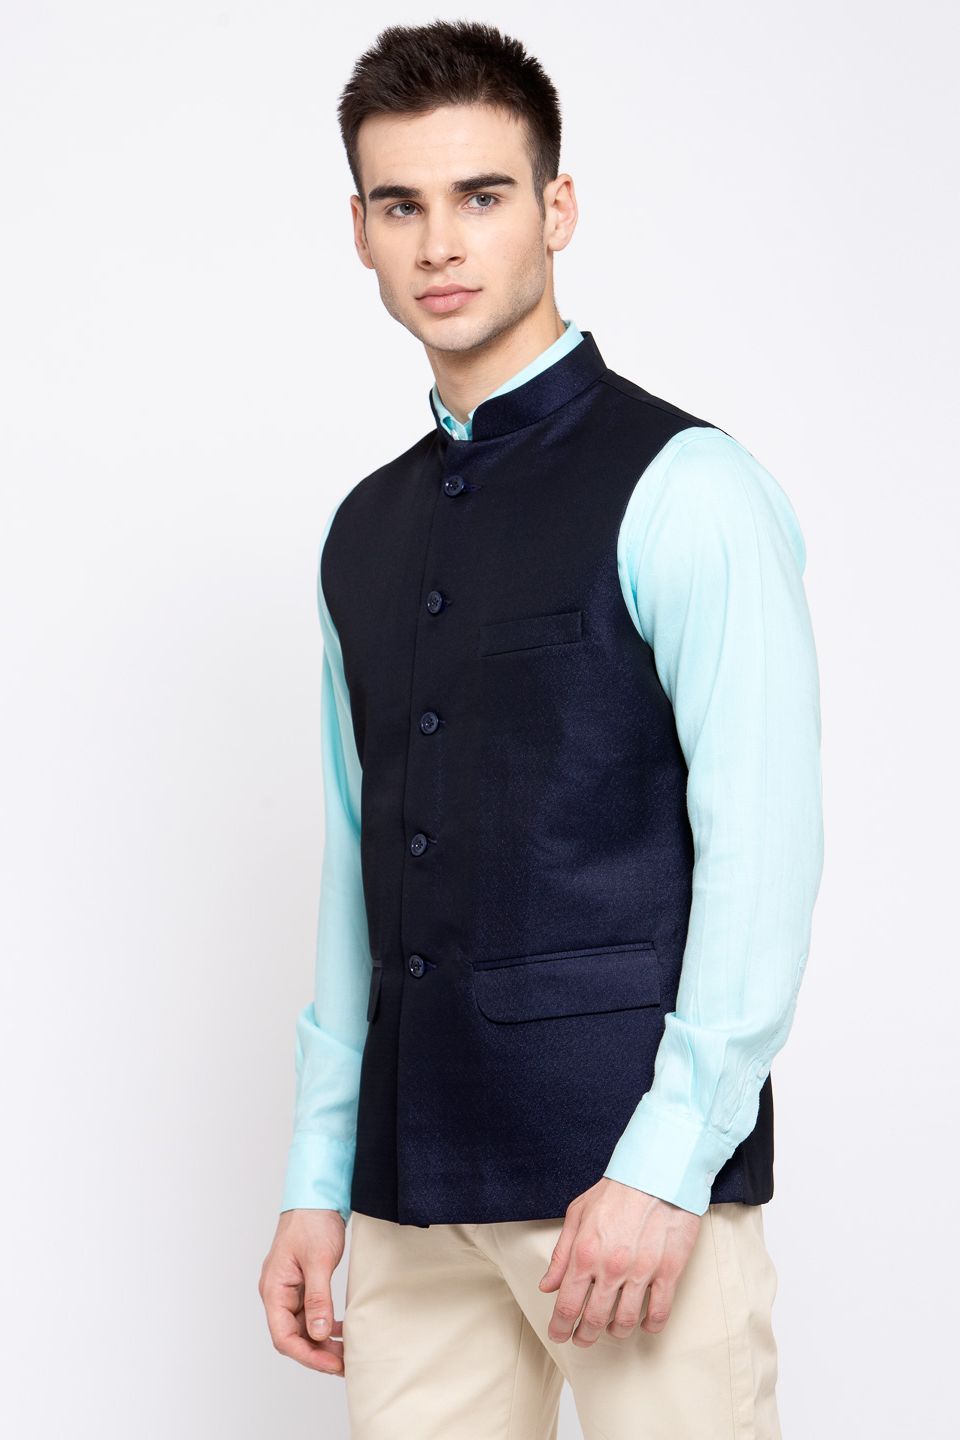 Wintage Men's Poly Blend Formal and Evening Nehru Jacket Vest Waistcoat : Navy Blue